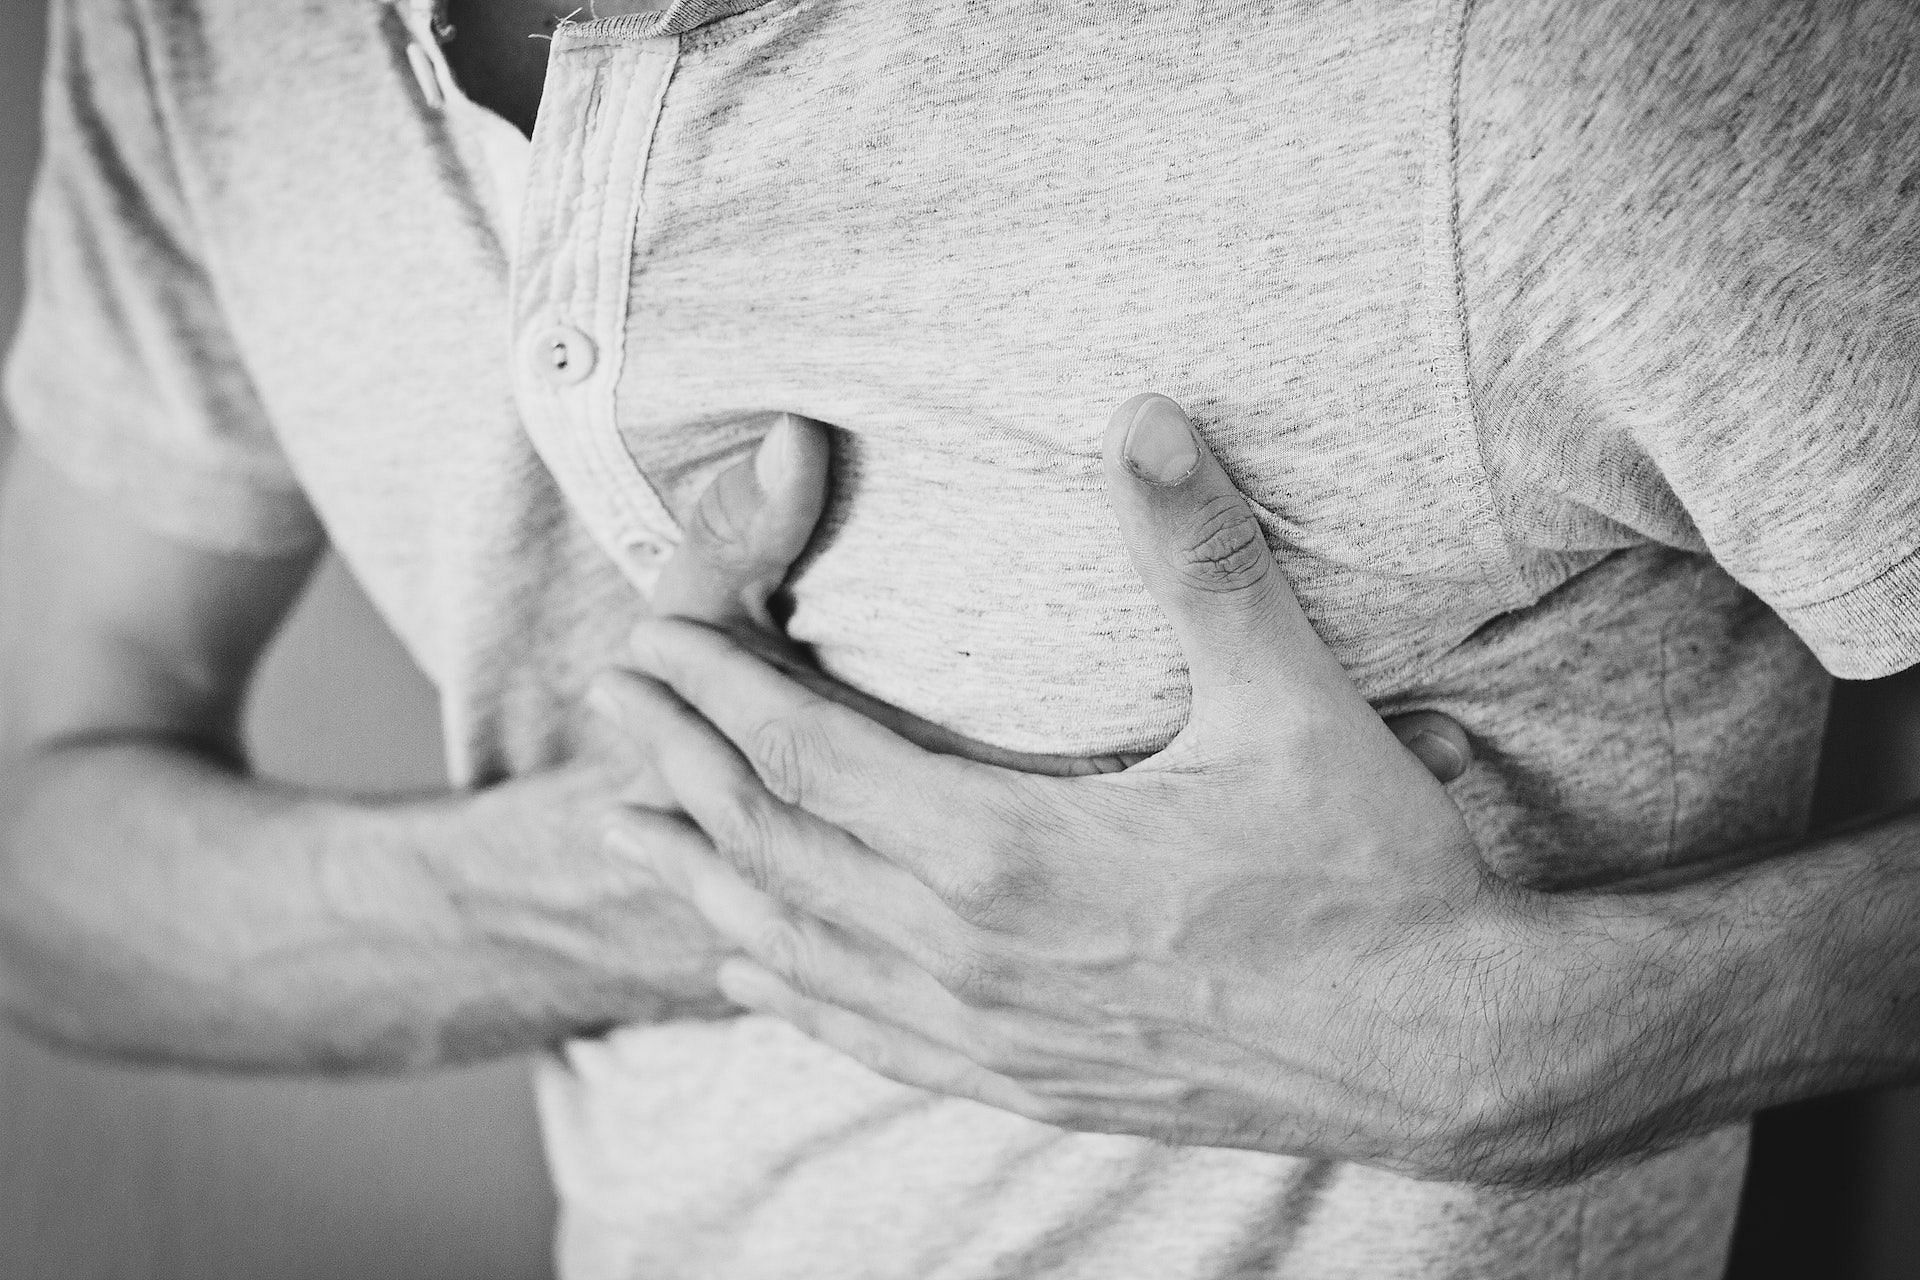 Oxidative stress leads to heart problems. (Photo via Pexels/freestocks.org)